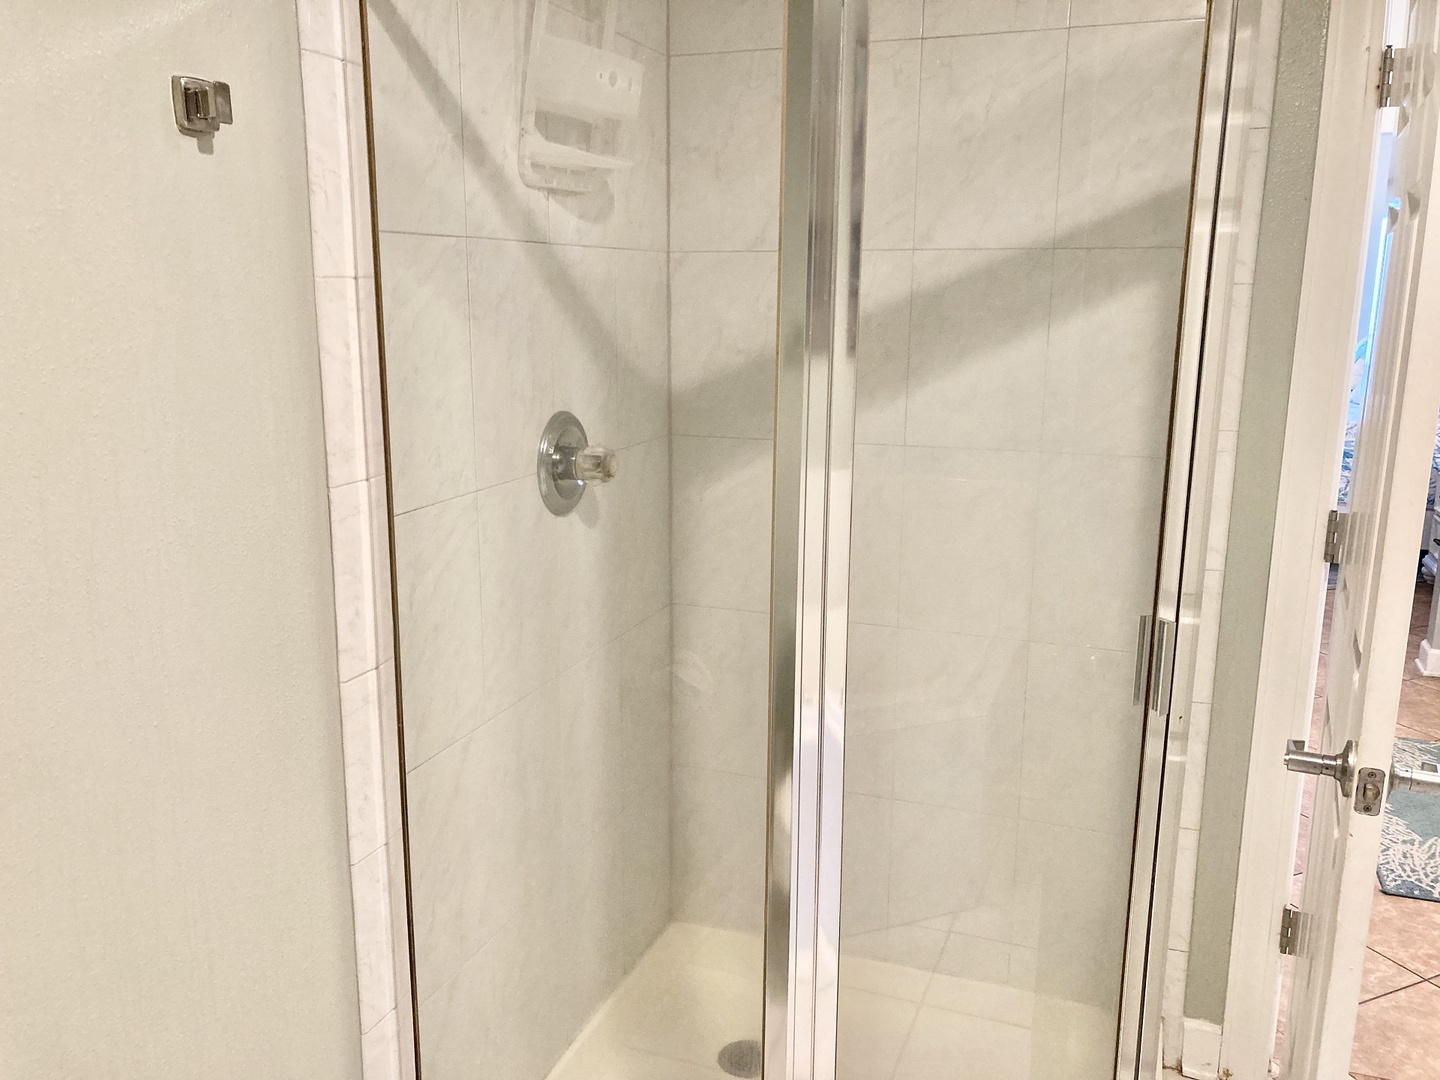 Primary bathroom glass shower